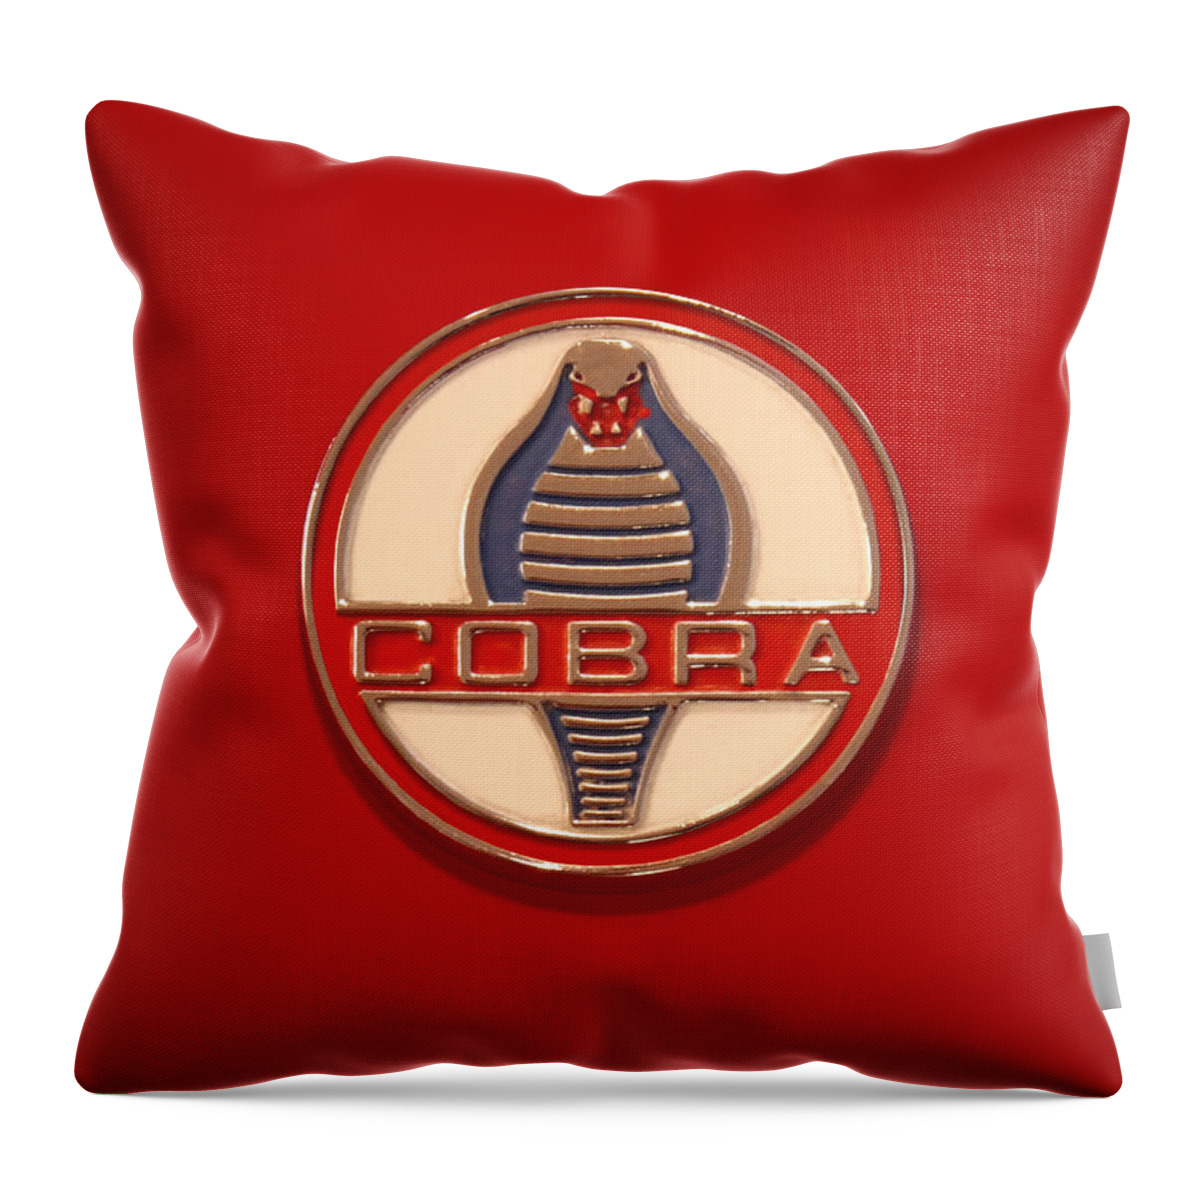 Transportation Throw Pillow featuring the photograph COBRA Emblem by Mike McGlothlen